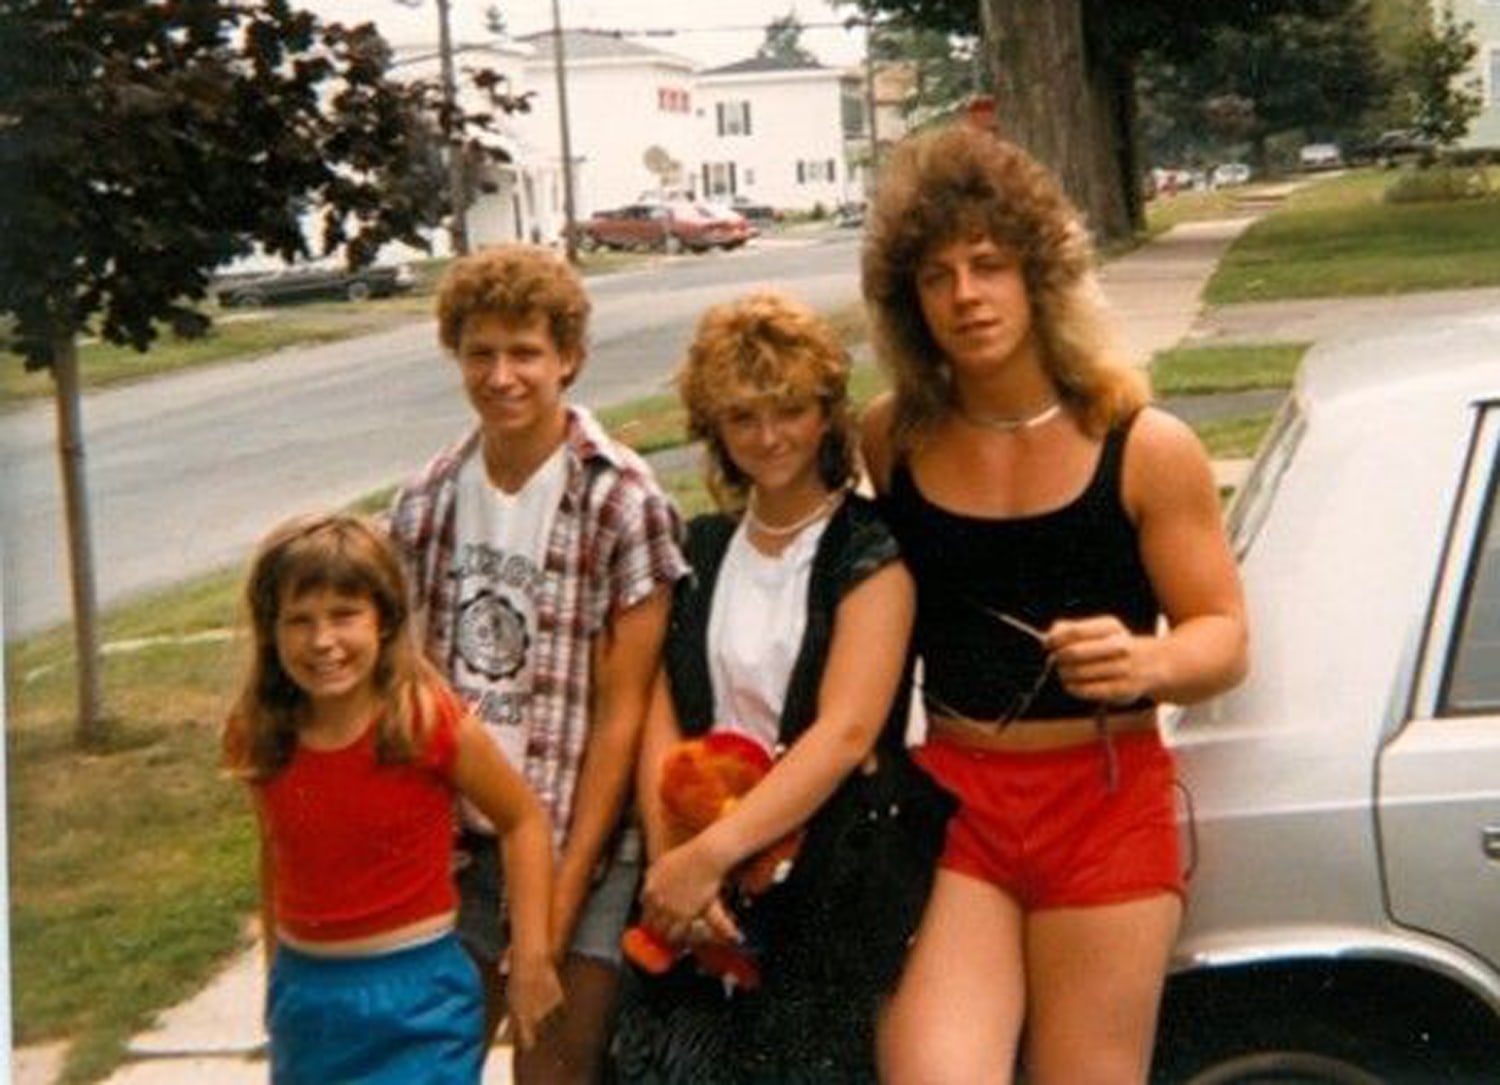 Awkward '80s: Big hair and wild style